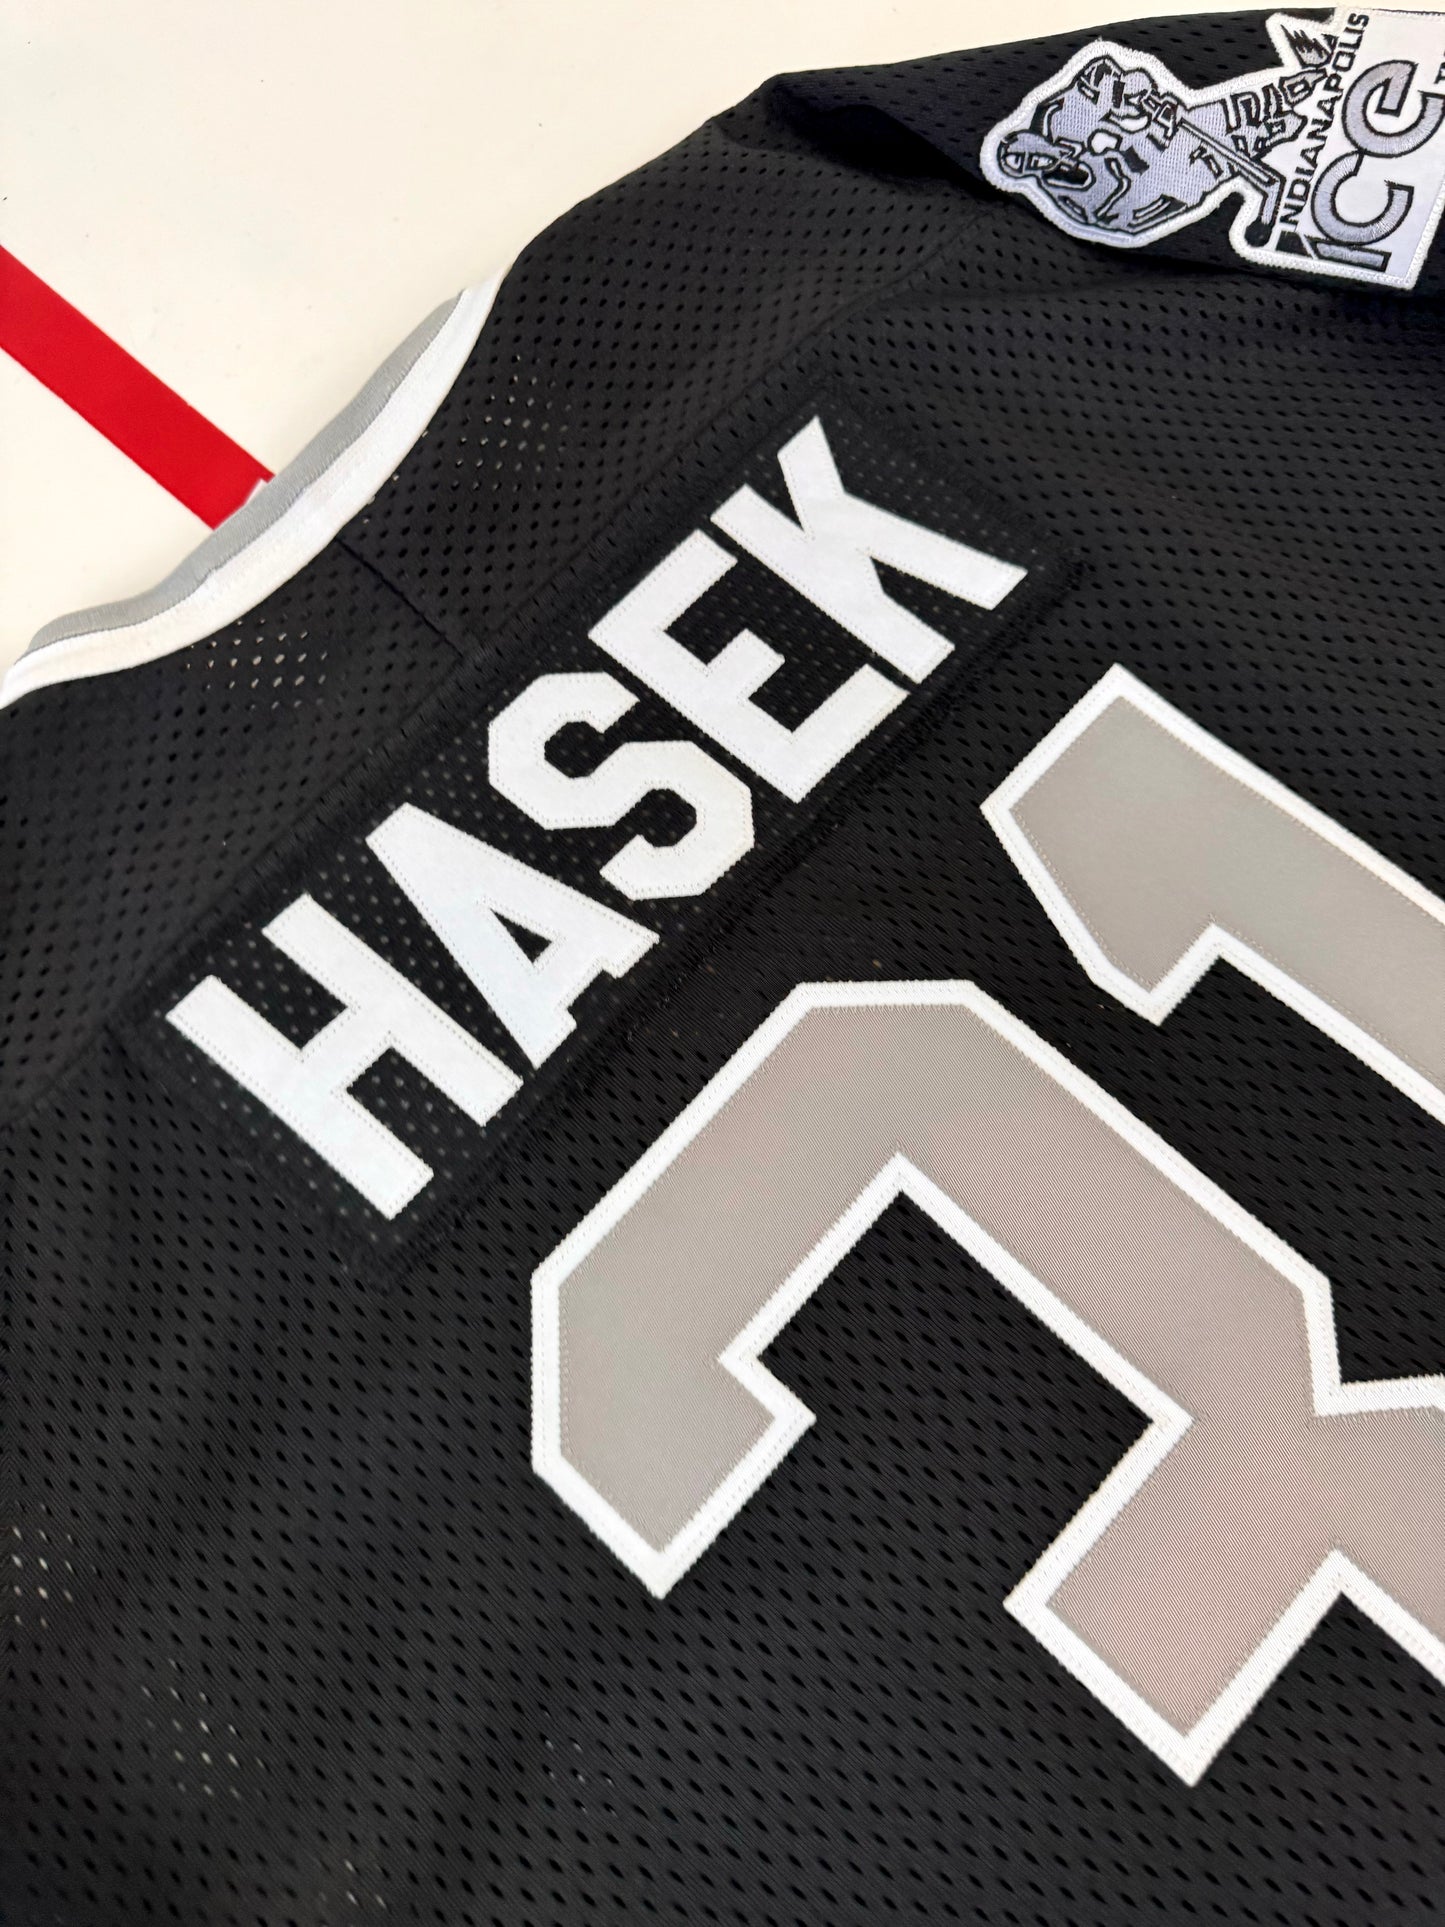 Indianapolis Ice 1990-1991 Dominik Hasek IHL Hockey Jersey (XXL)